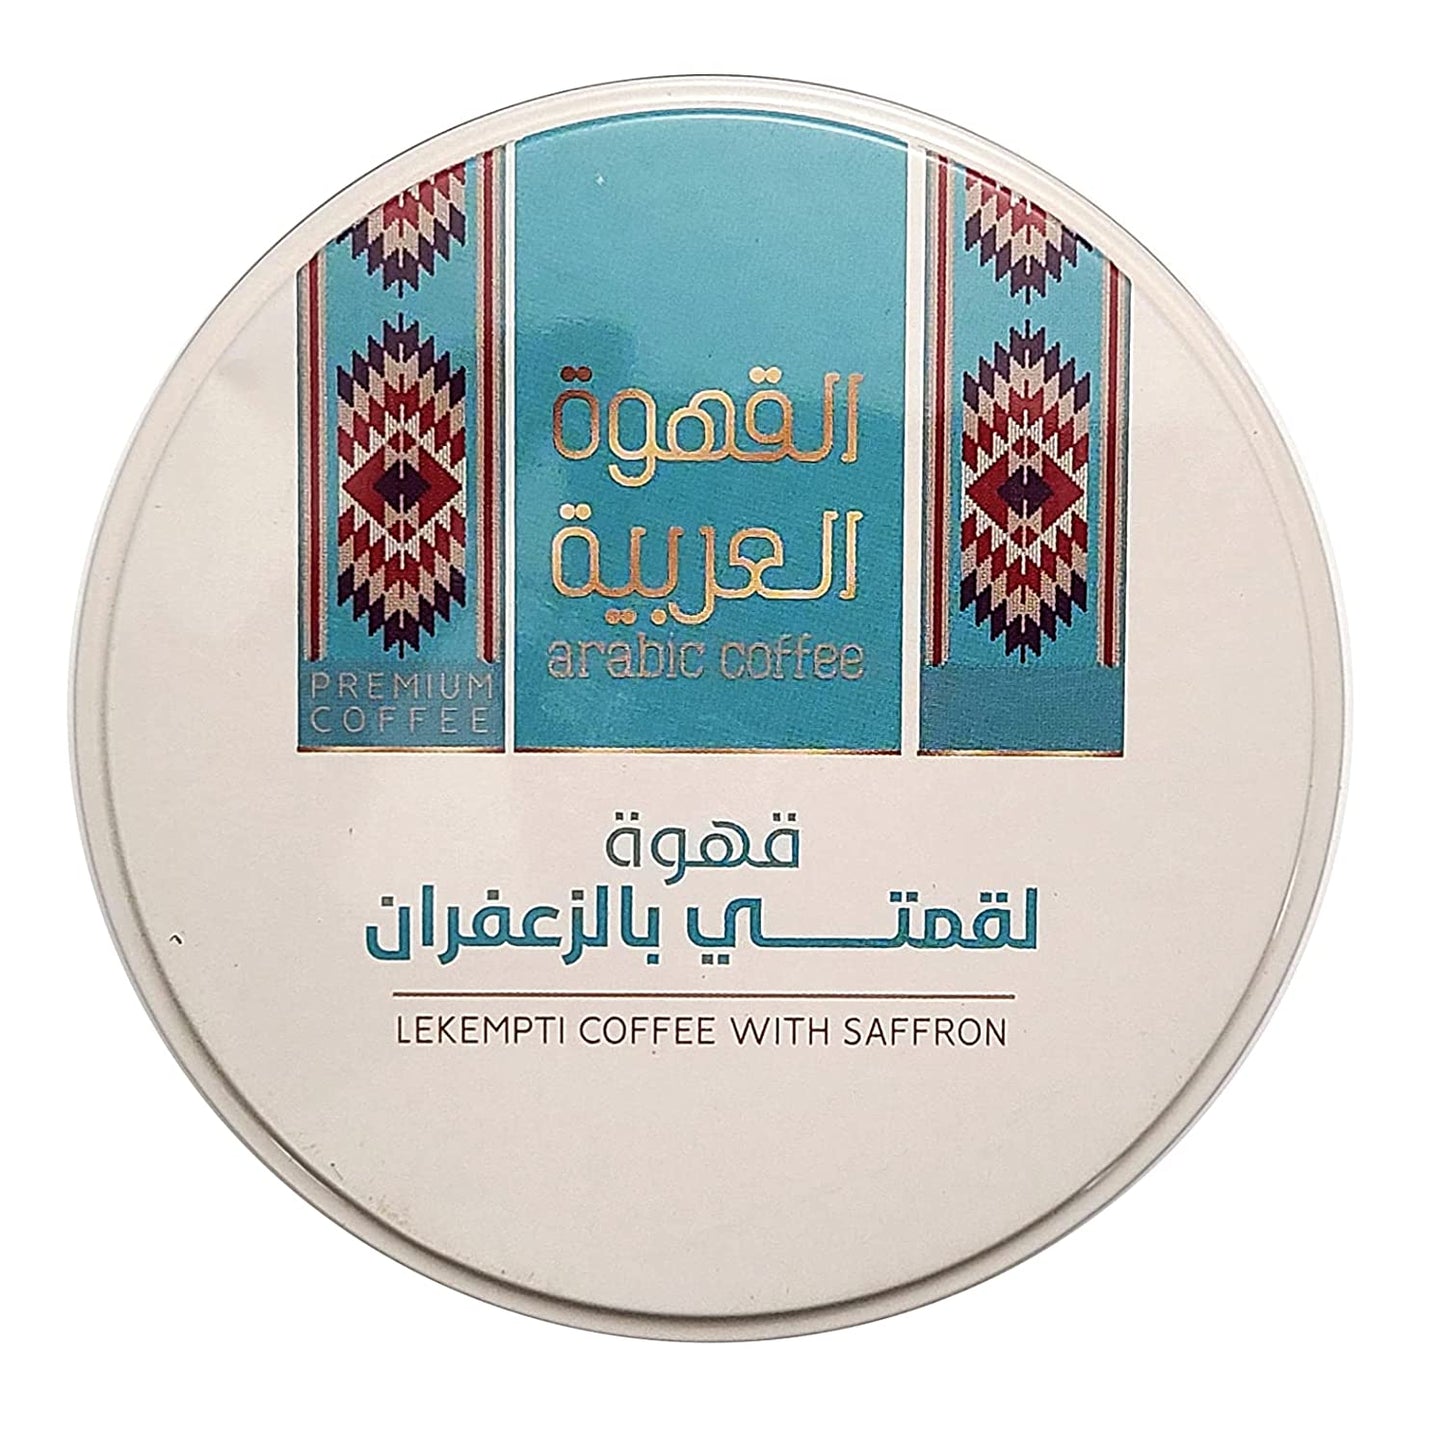 Arabia coffee with saffron, Lakmati Coffee with saffron - Saudi Arabia coffee (250 gm 8.8 oz) قهوة عربية بالزعفران قهوة لقمتي بالزعفران قهوة عربية سعودية بالزعفران